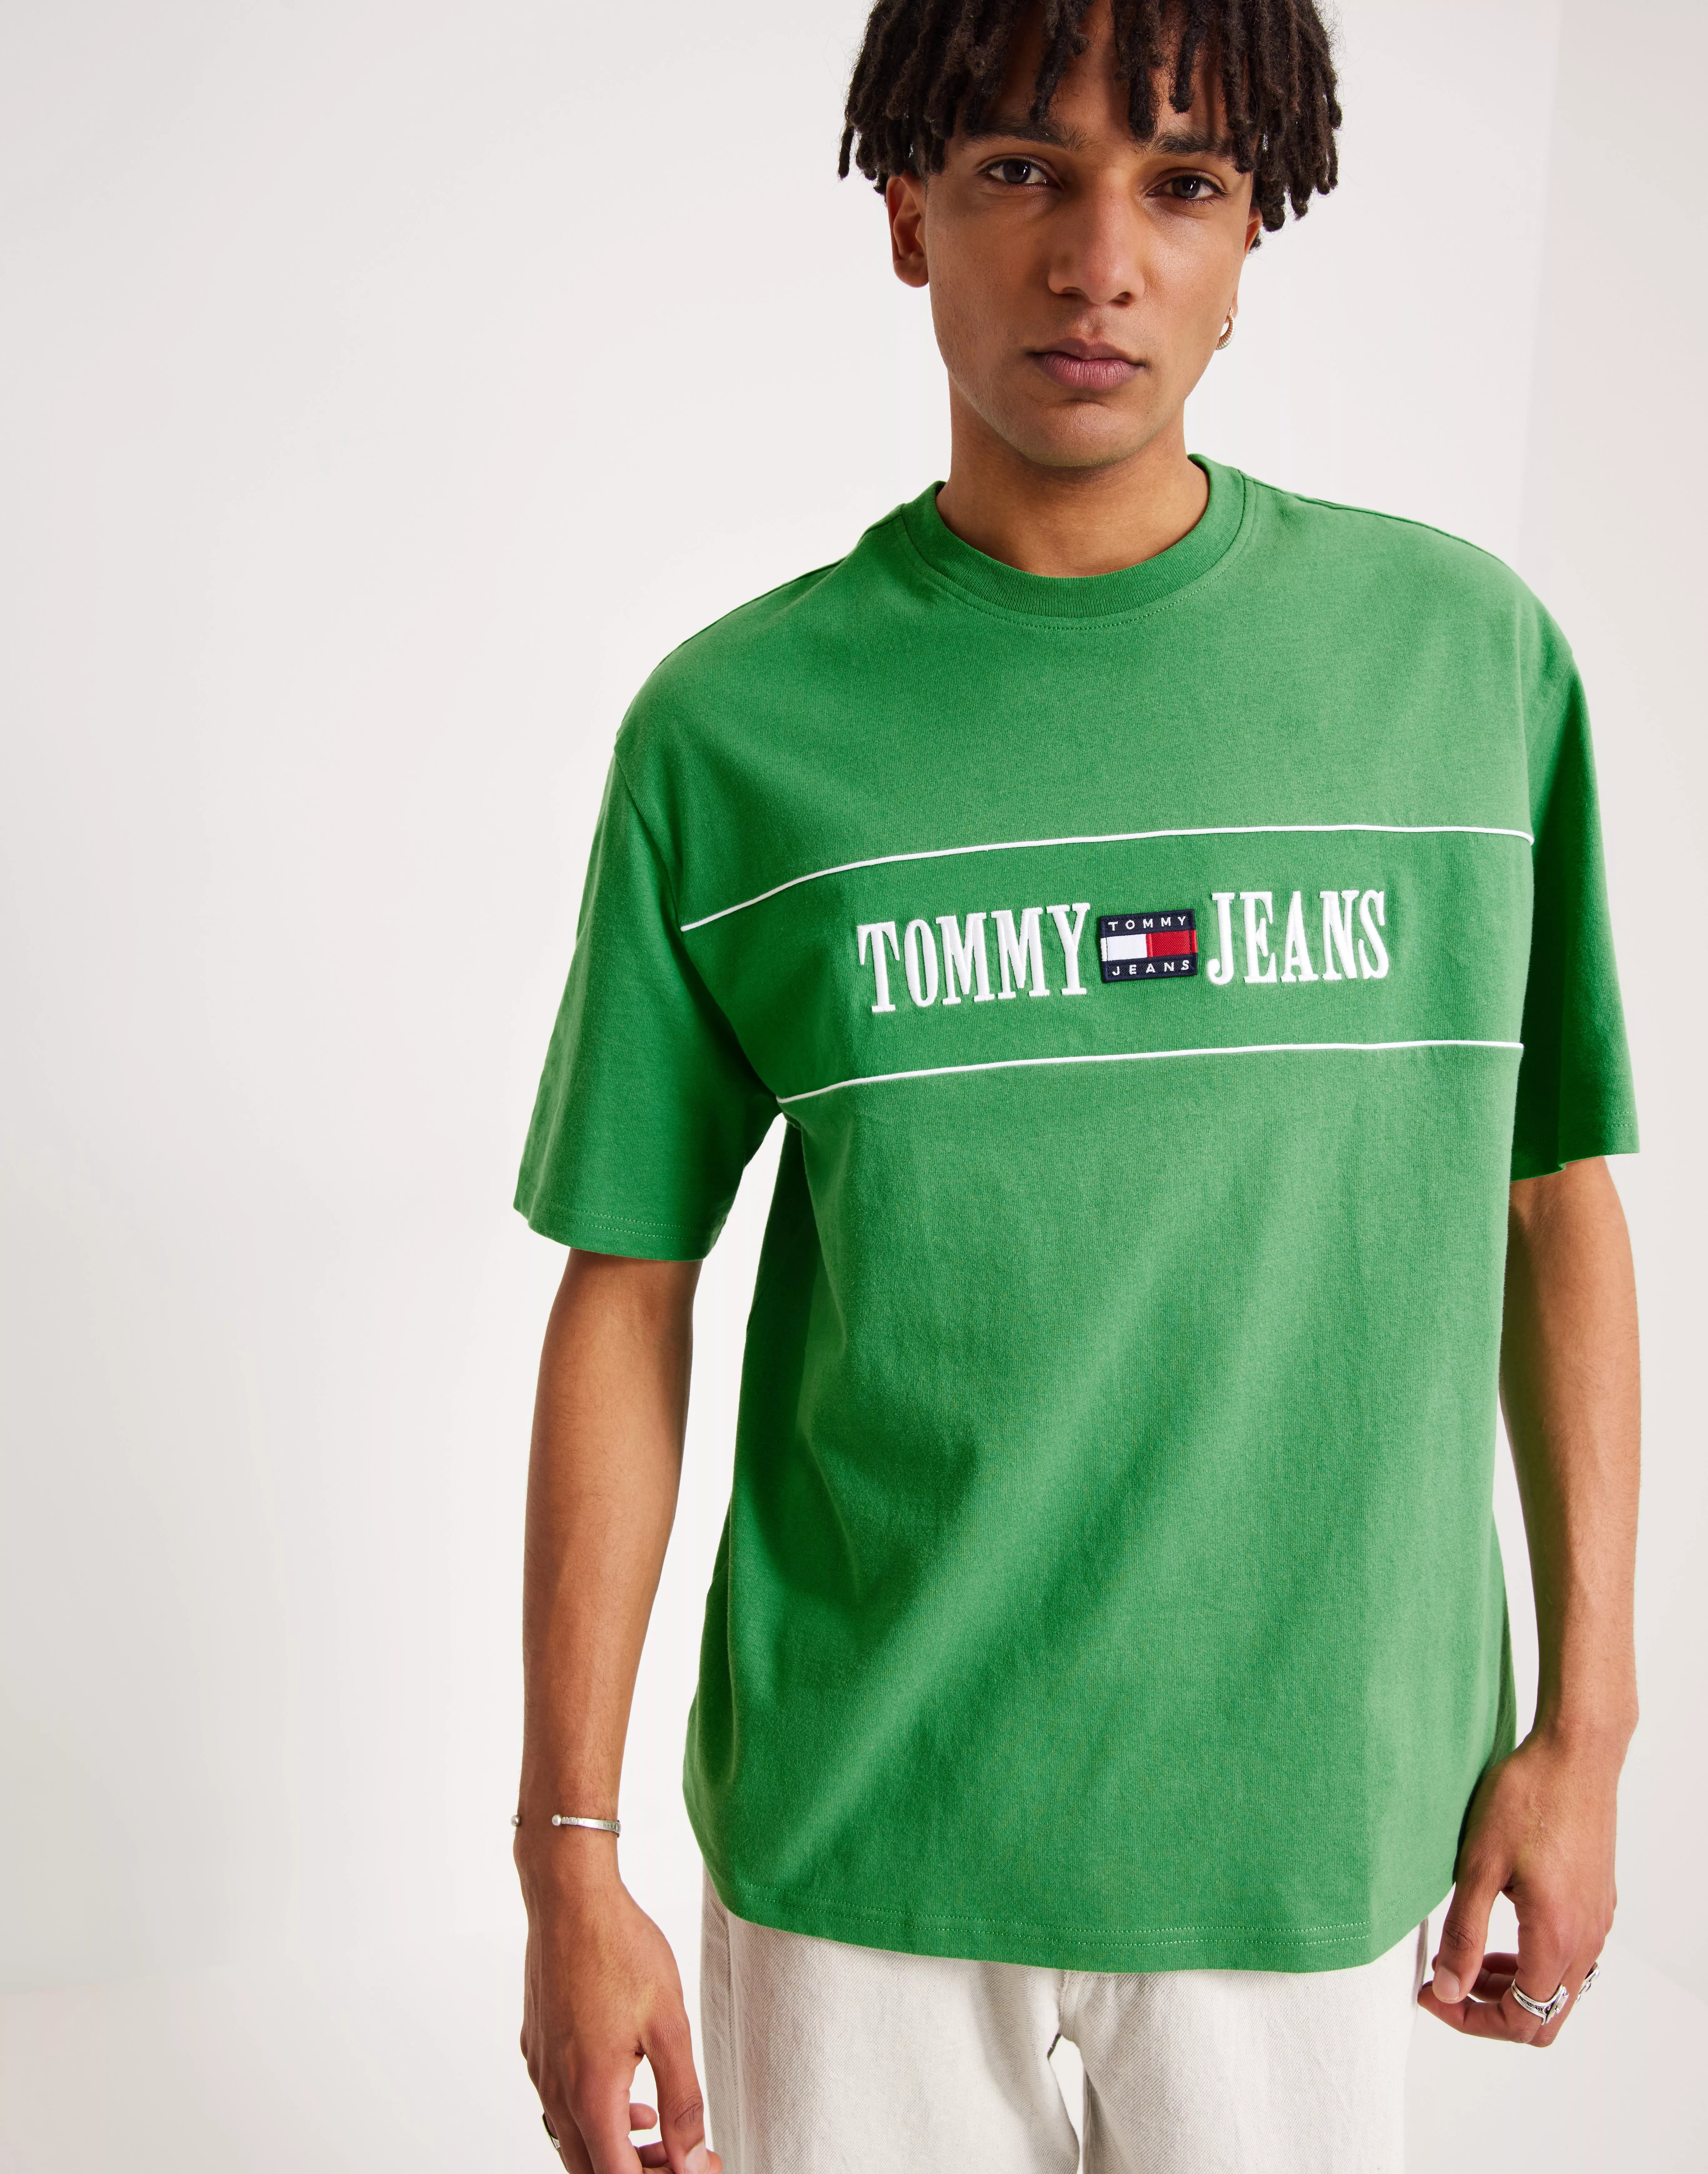 NLYMAN Buy ARCHIVE TEE SKATE Jeans TJM Tommy Coastal - Green |